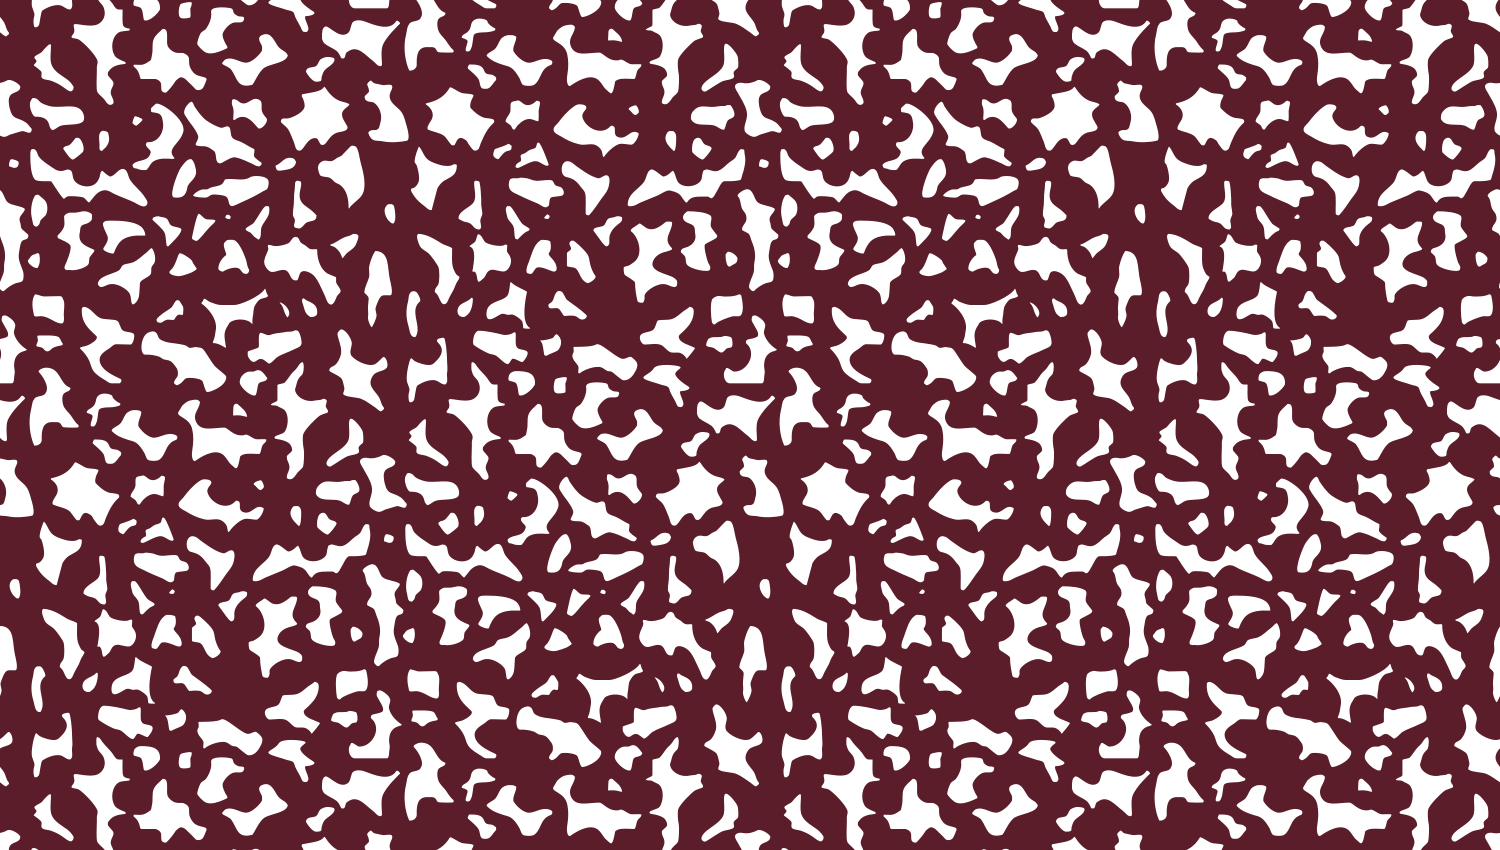 Parasoleil™ Nukubalavu© pattern displayed with a burgundy color overlay